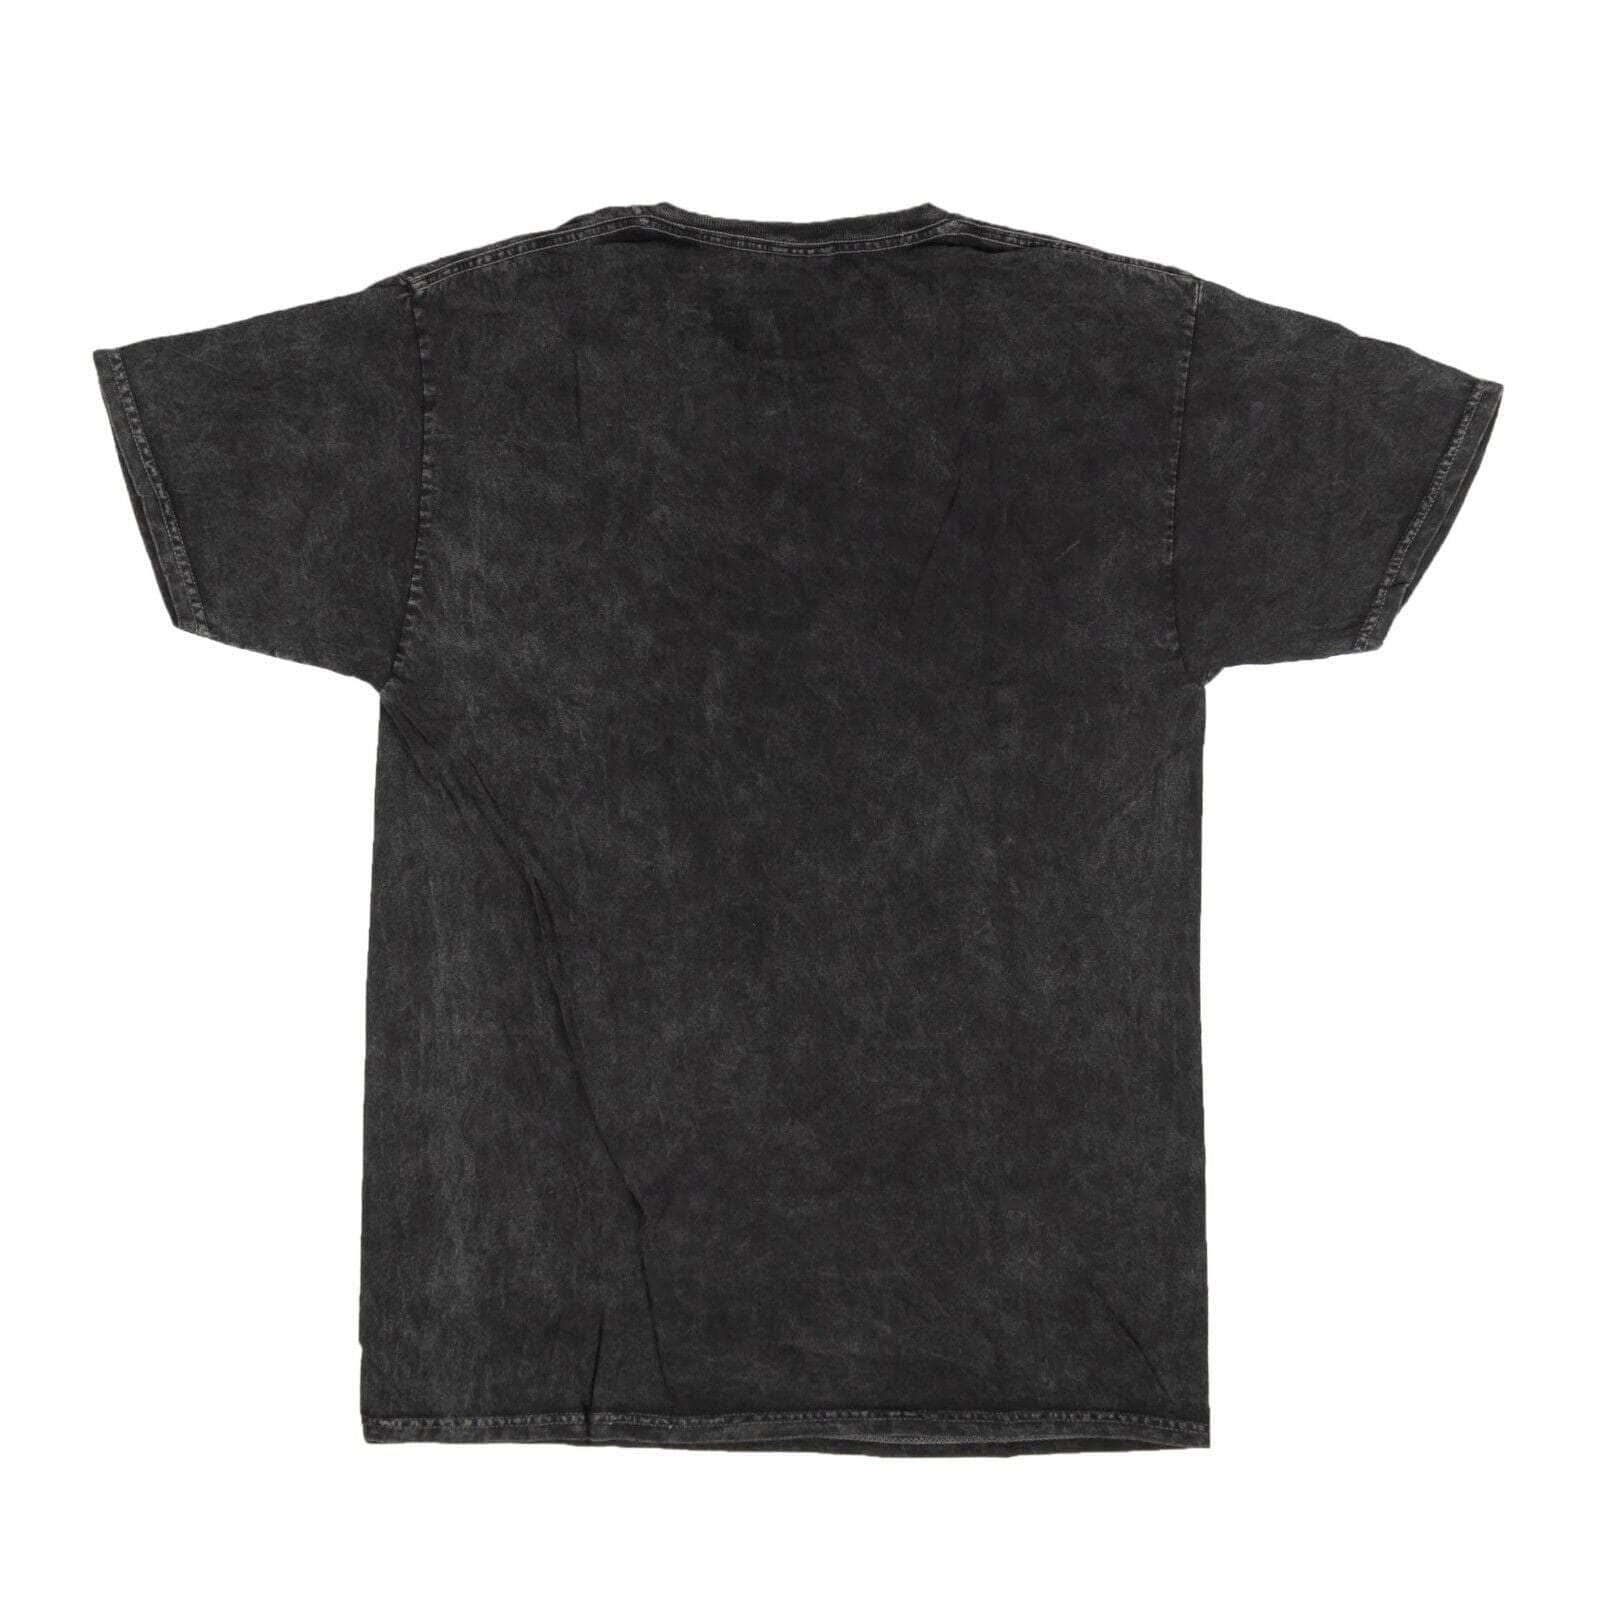 NBA Men's Shirt - Black - XXL